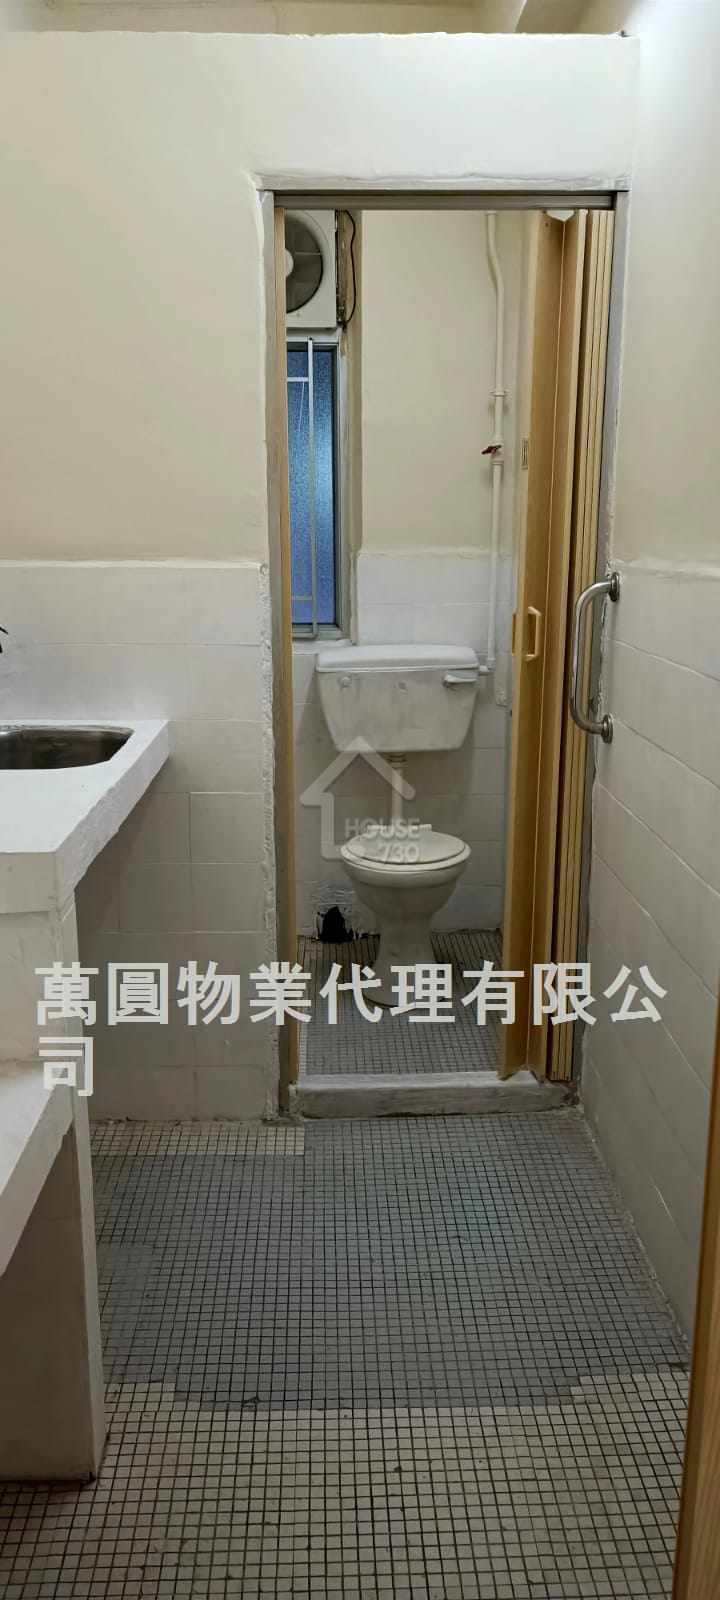 Tai Kok Tsui CHUNG HING BUILDING Middle Floor House730-6238277